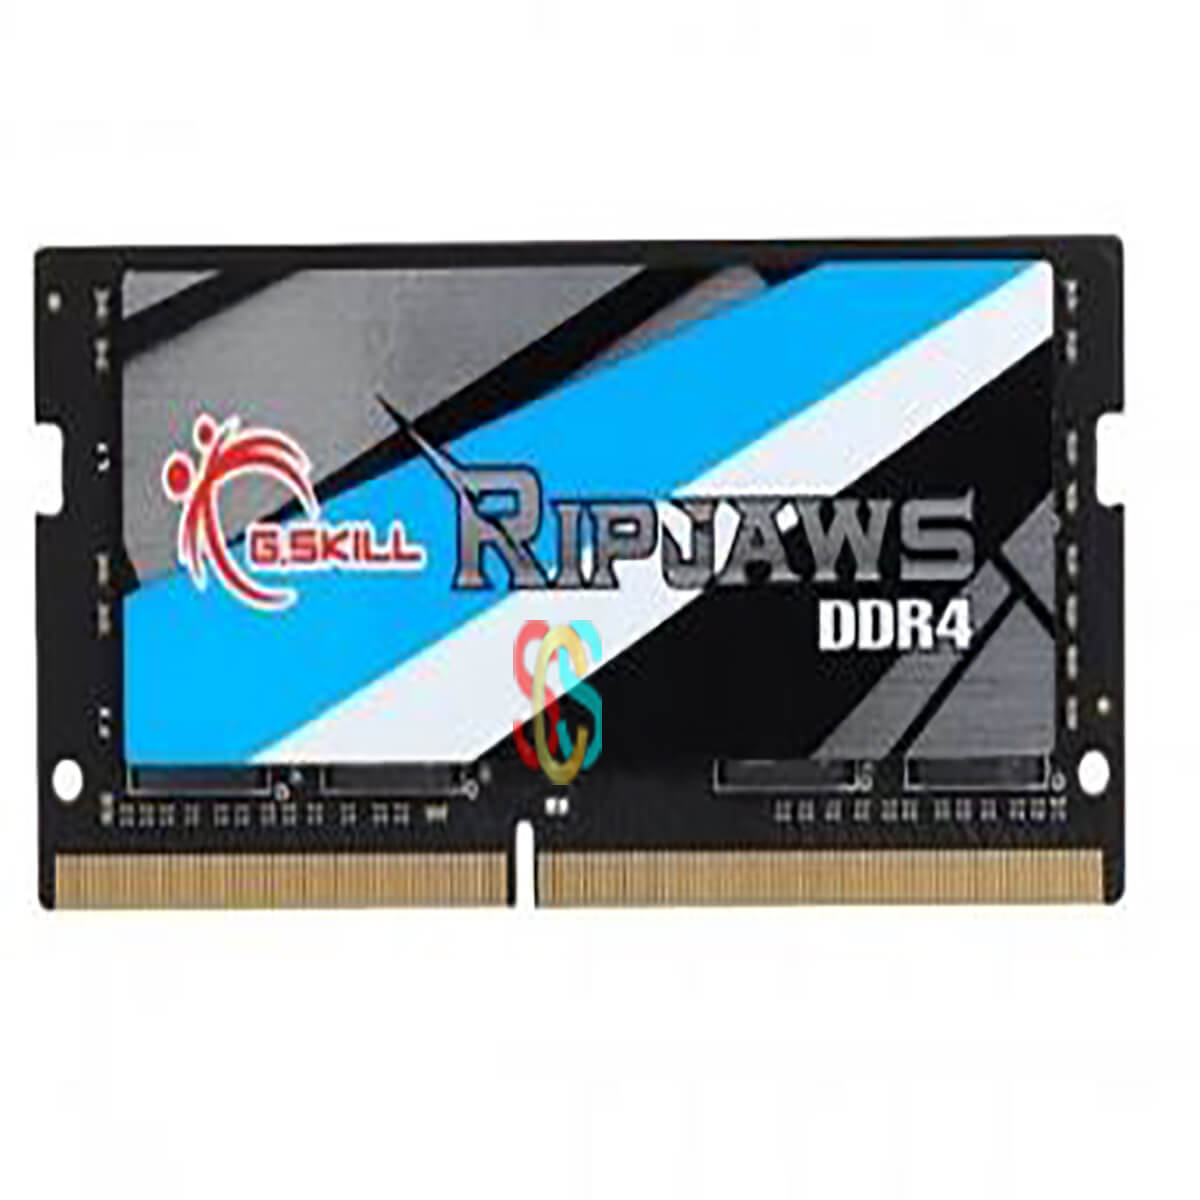 G.Skill Ripjaws 4GB DDR4-L 2400 BUS Notebook RAM